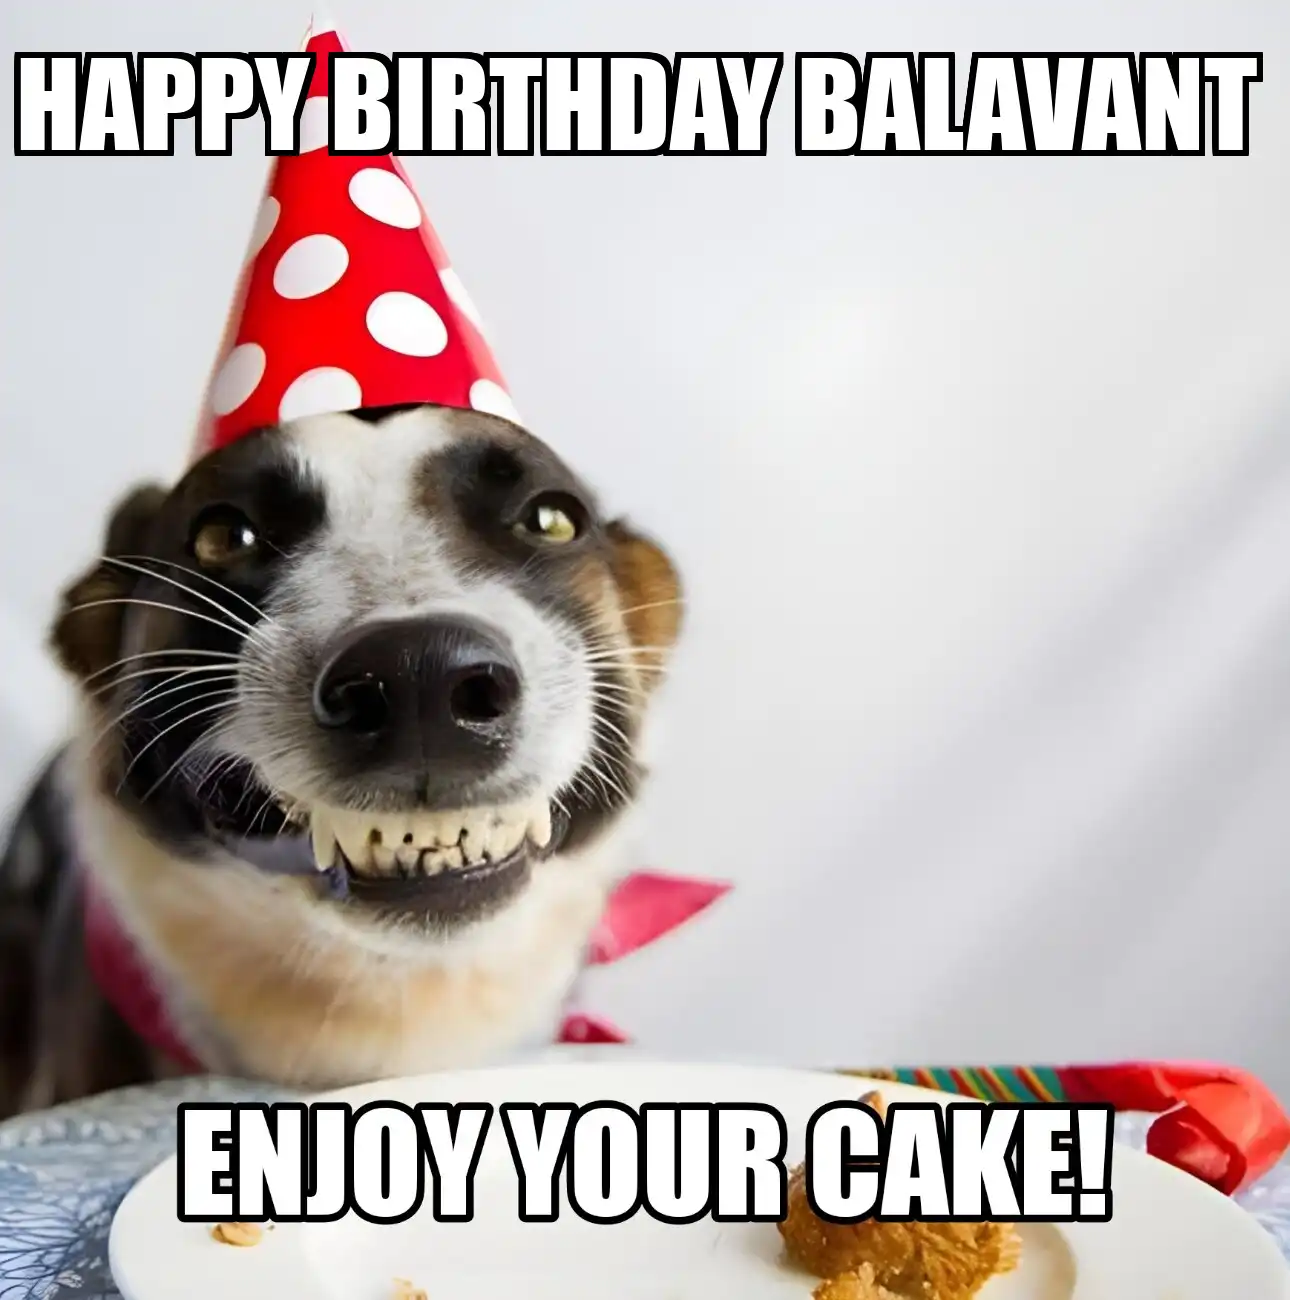 Happy Birthday Balavant Enjoy Your Cake Dog Meme